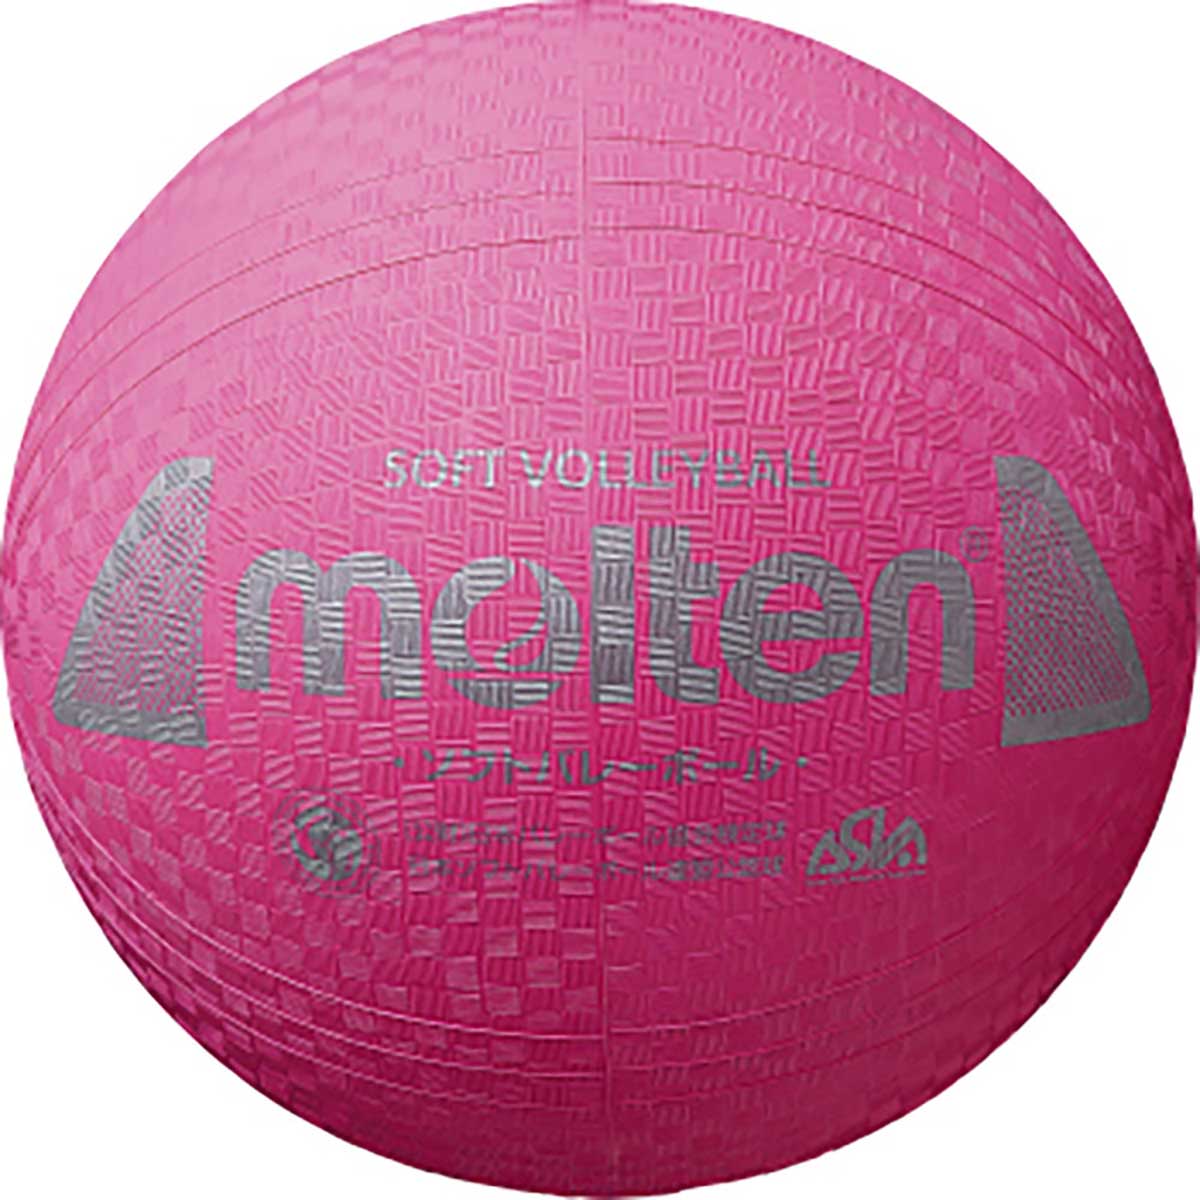 molten(モルテン) S3Y1200P 検定球 ファミリー・トリム用 ソフトバレーボール ピンク